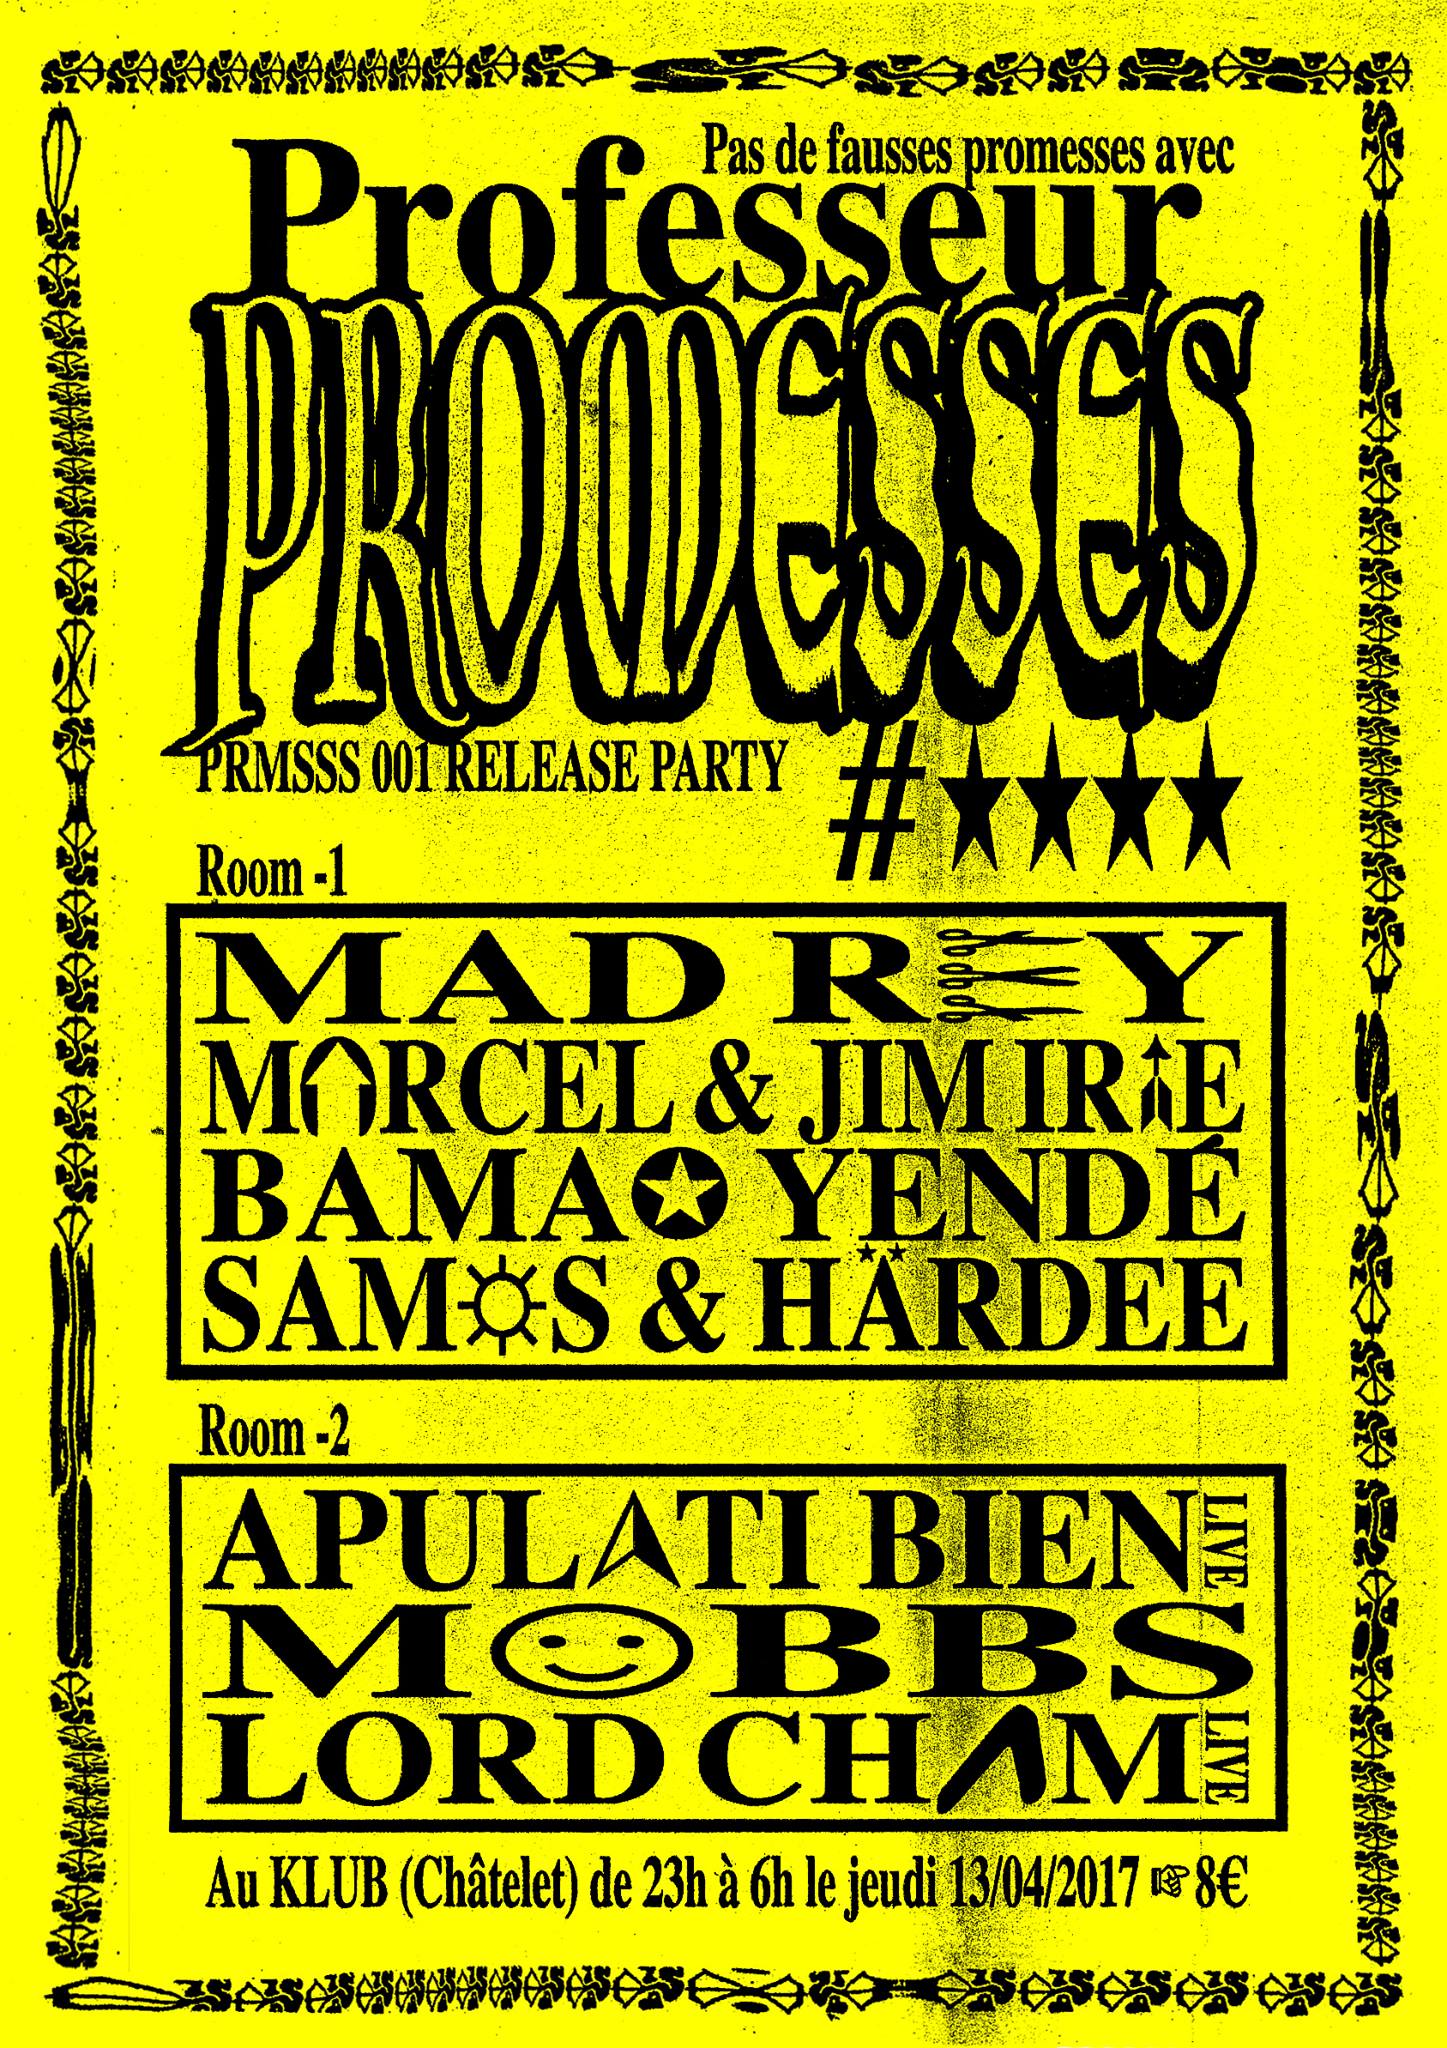 Professeur Promesses #4 w/ Mad Rey, Mobbs, Apulati Bien & more ■ 13.04